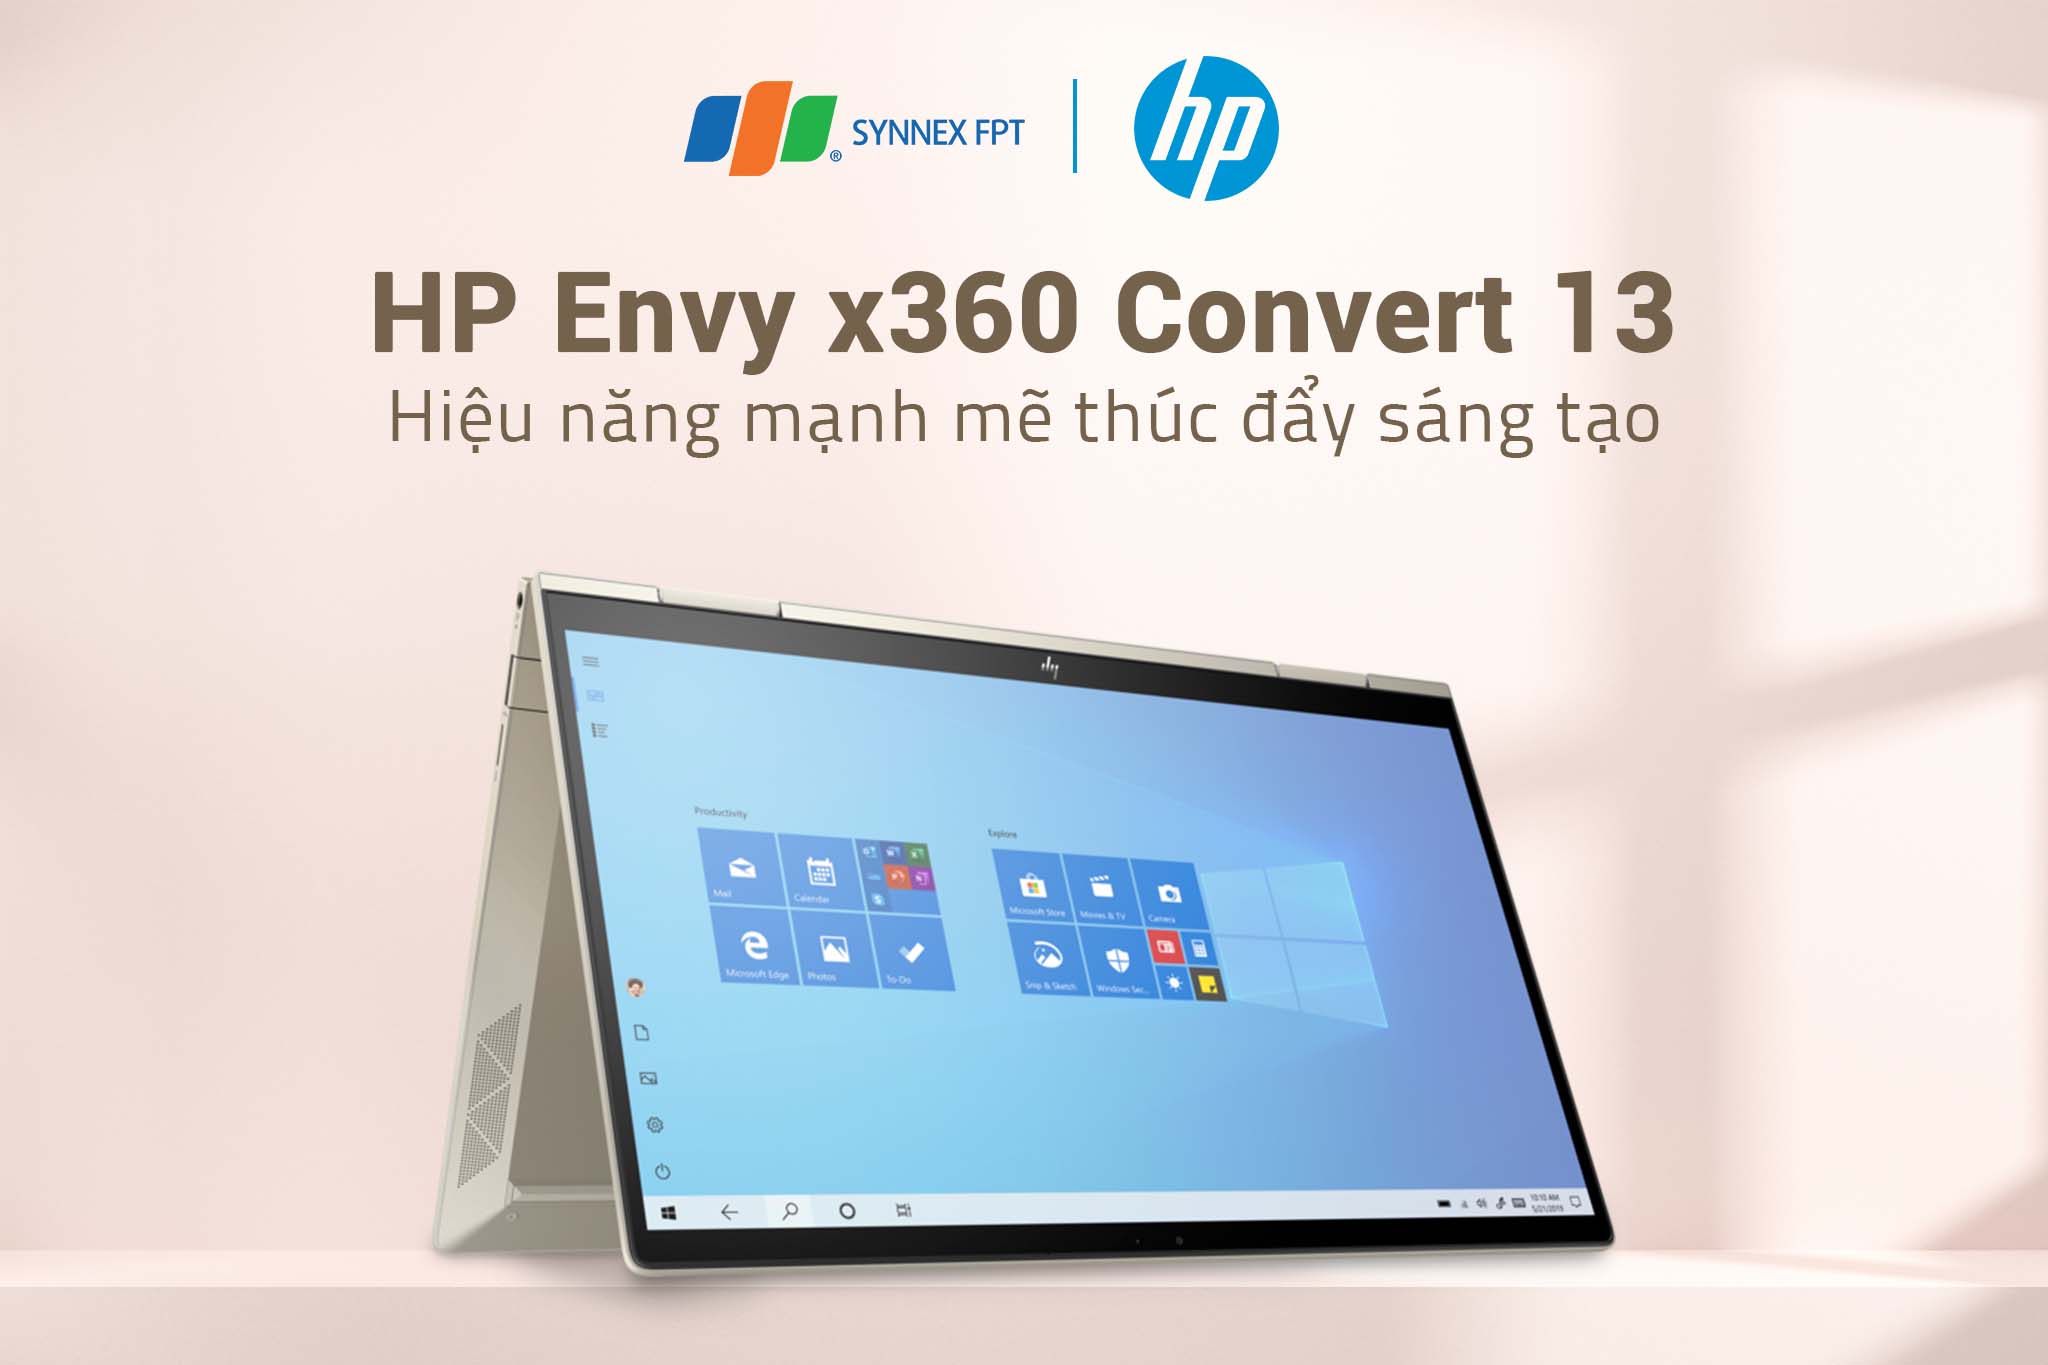 HP Envy x360 Convert 13